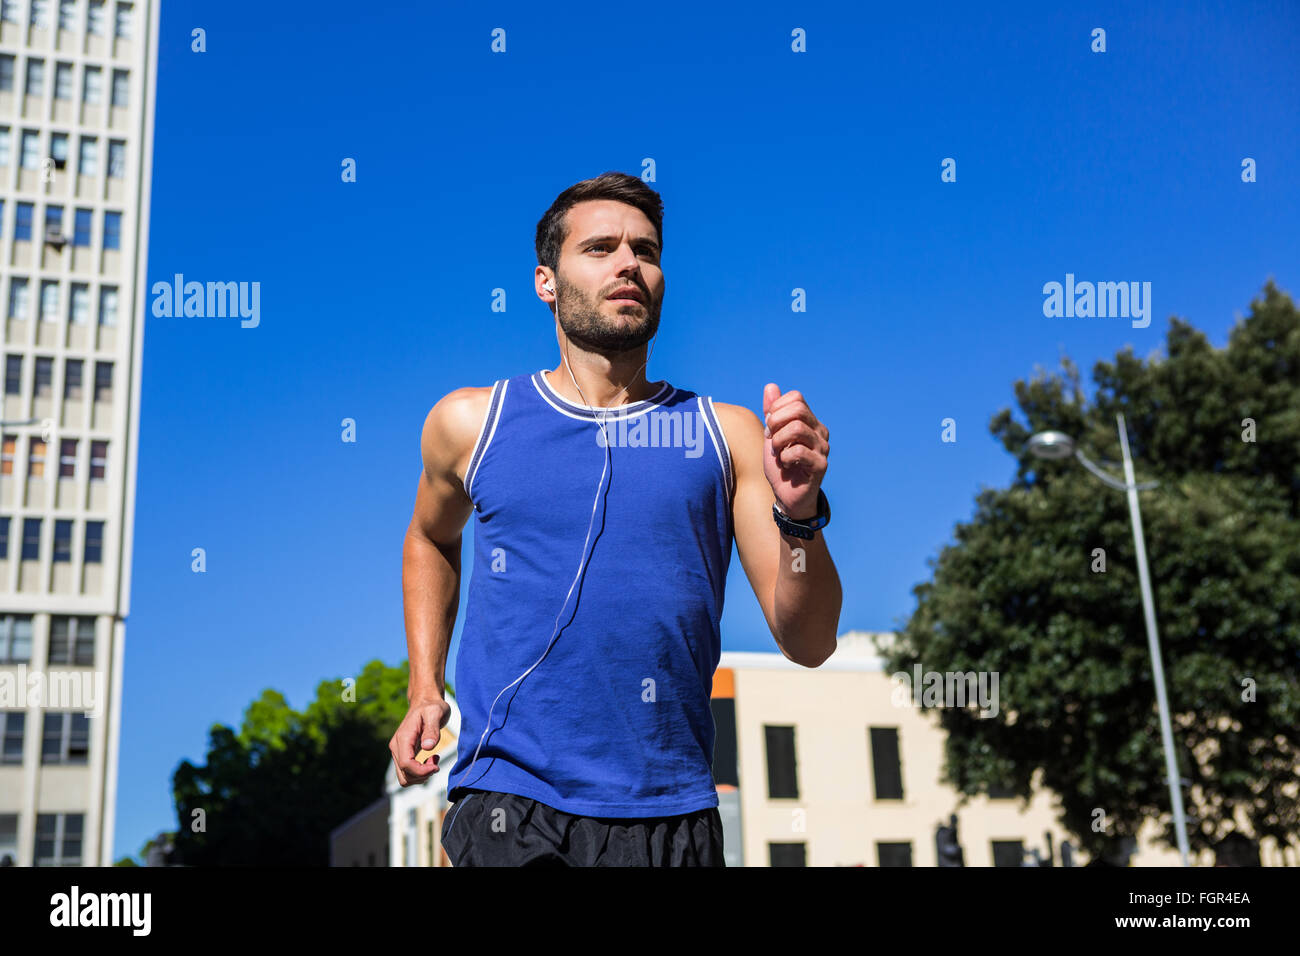 Beau jogging sportif contre le ciel bleu Banque D'Images